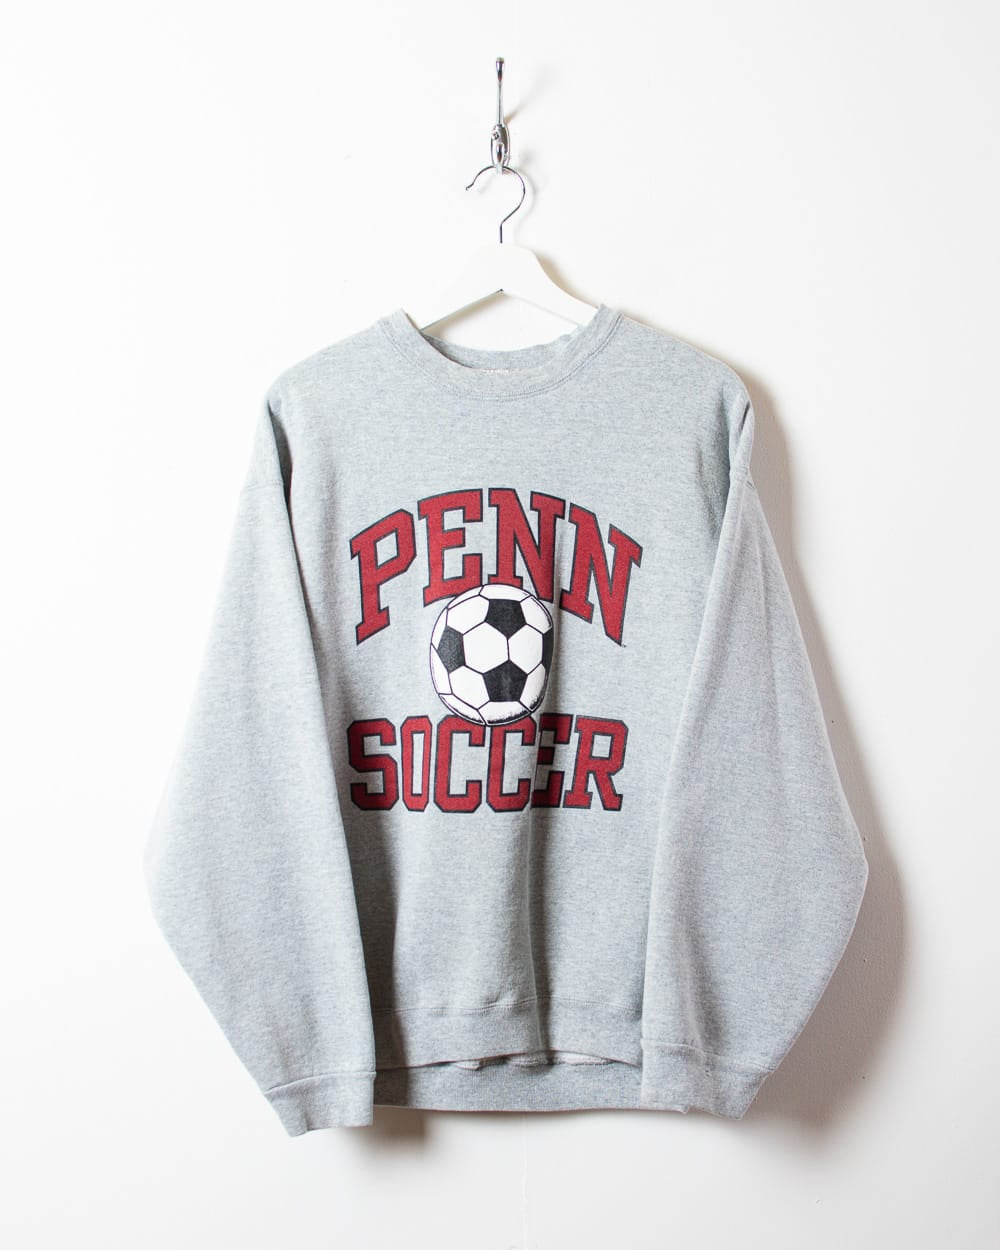 Stone Penn State Soccer Sweatshirt - Small